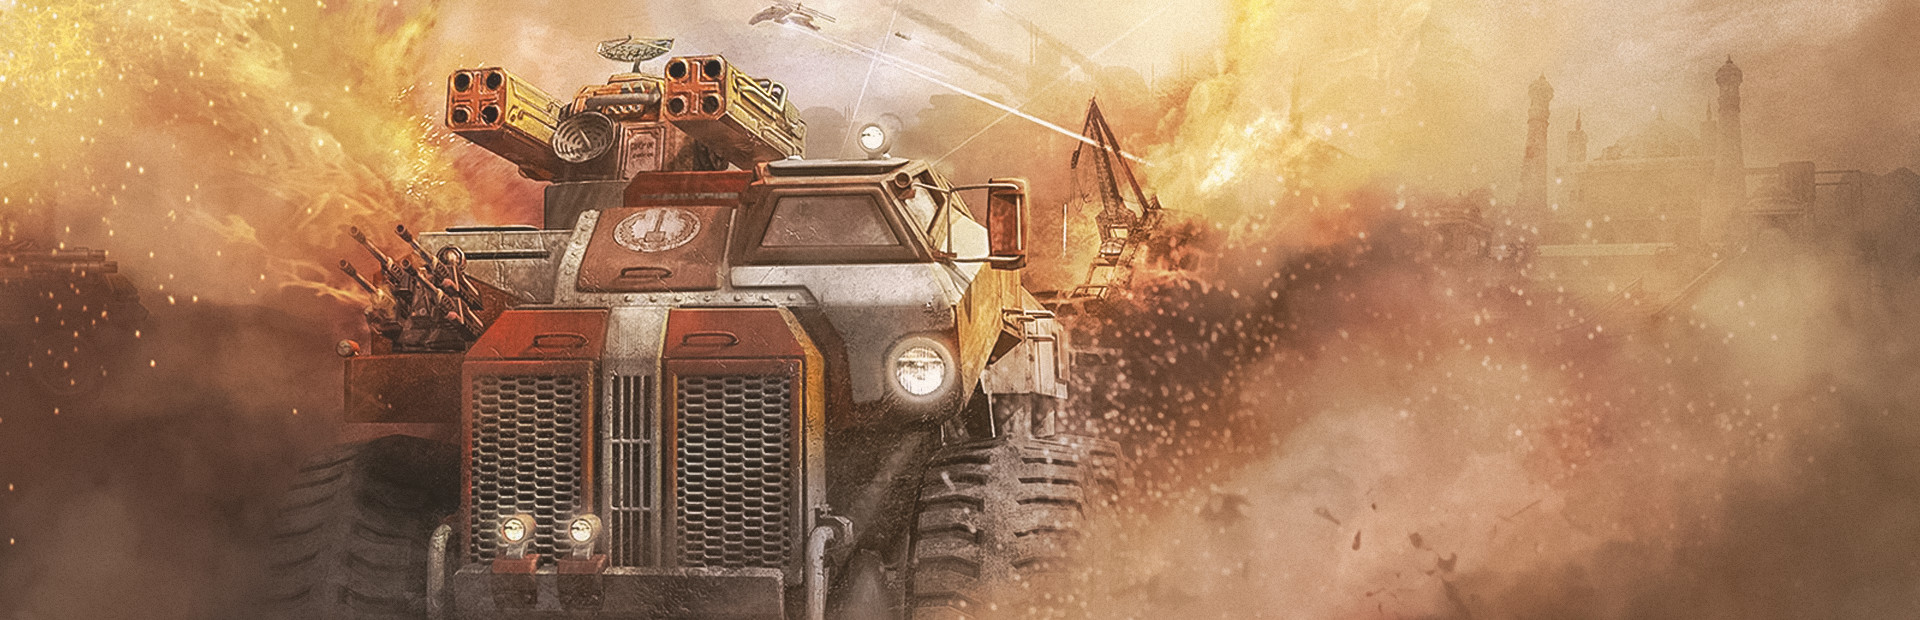 Hard Truck Apocalypse / Ex Machina cover image